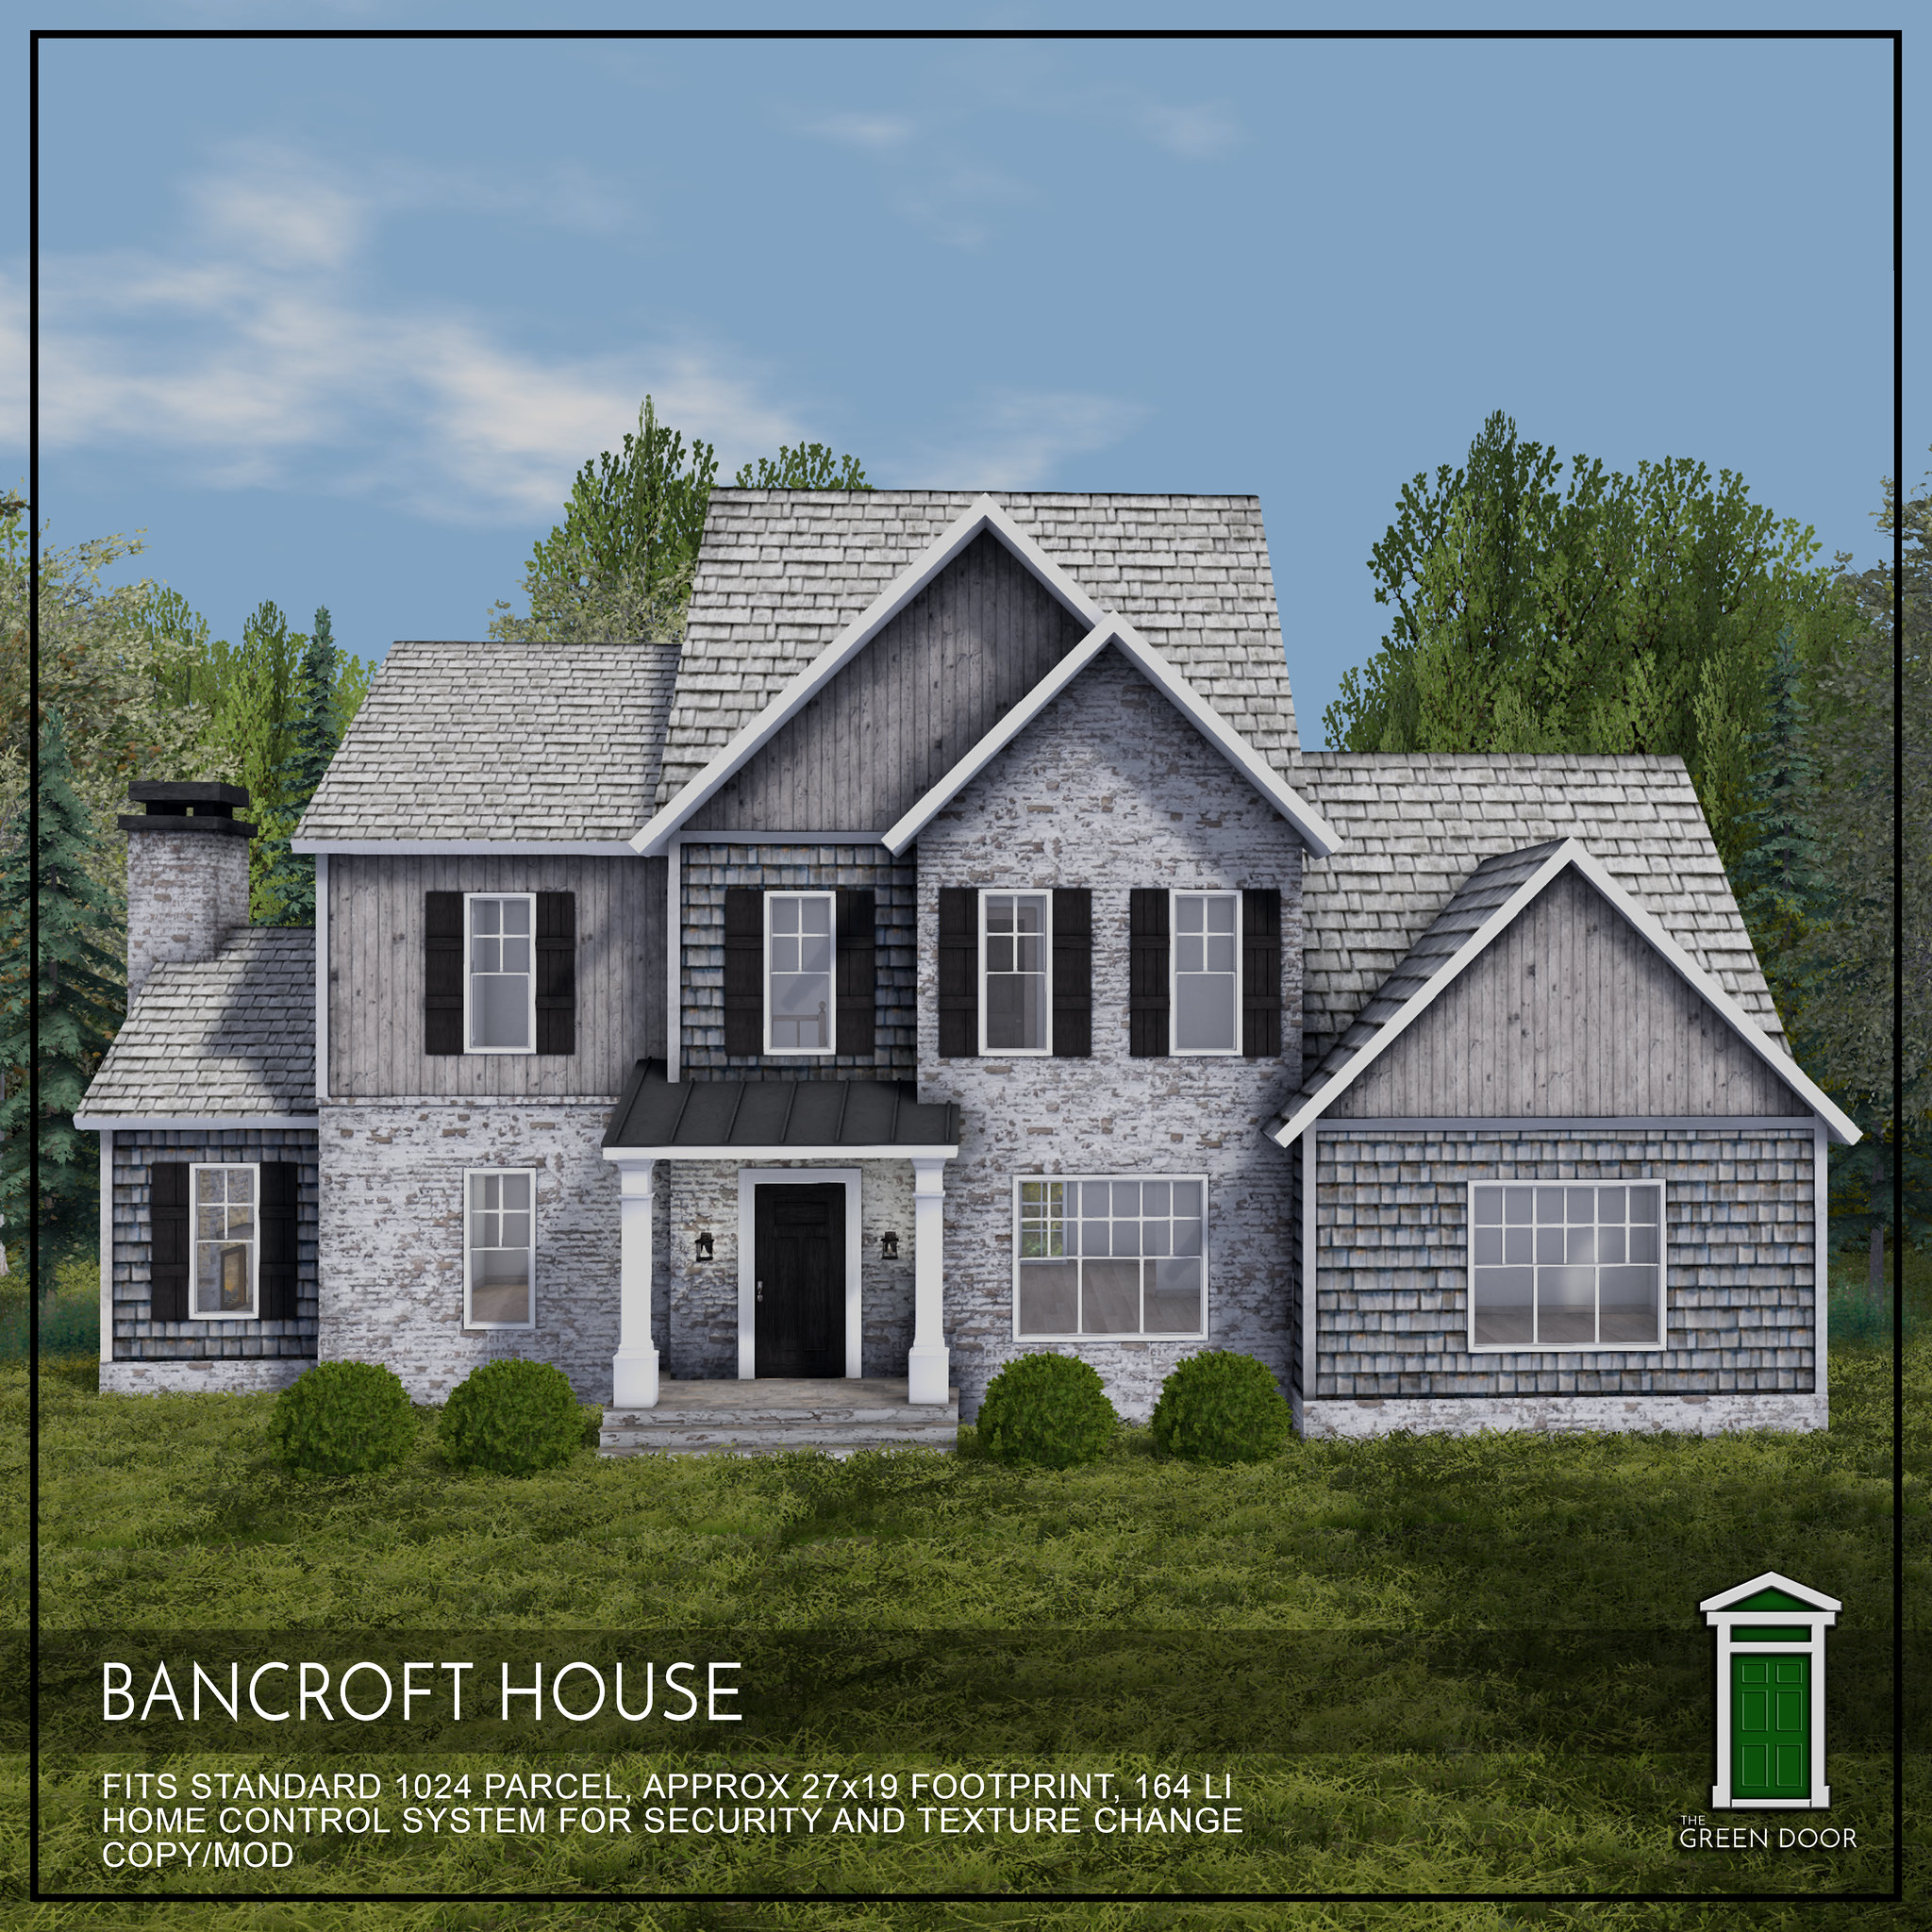 The Green Door – Bancroft House